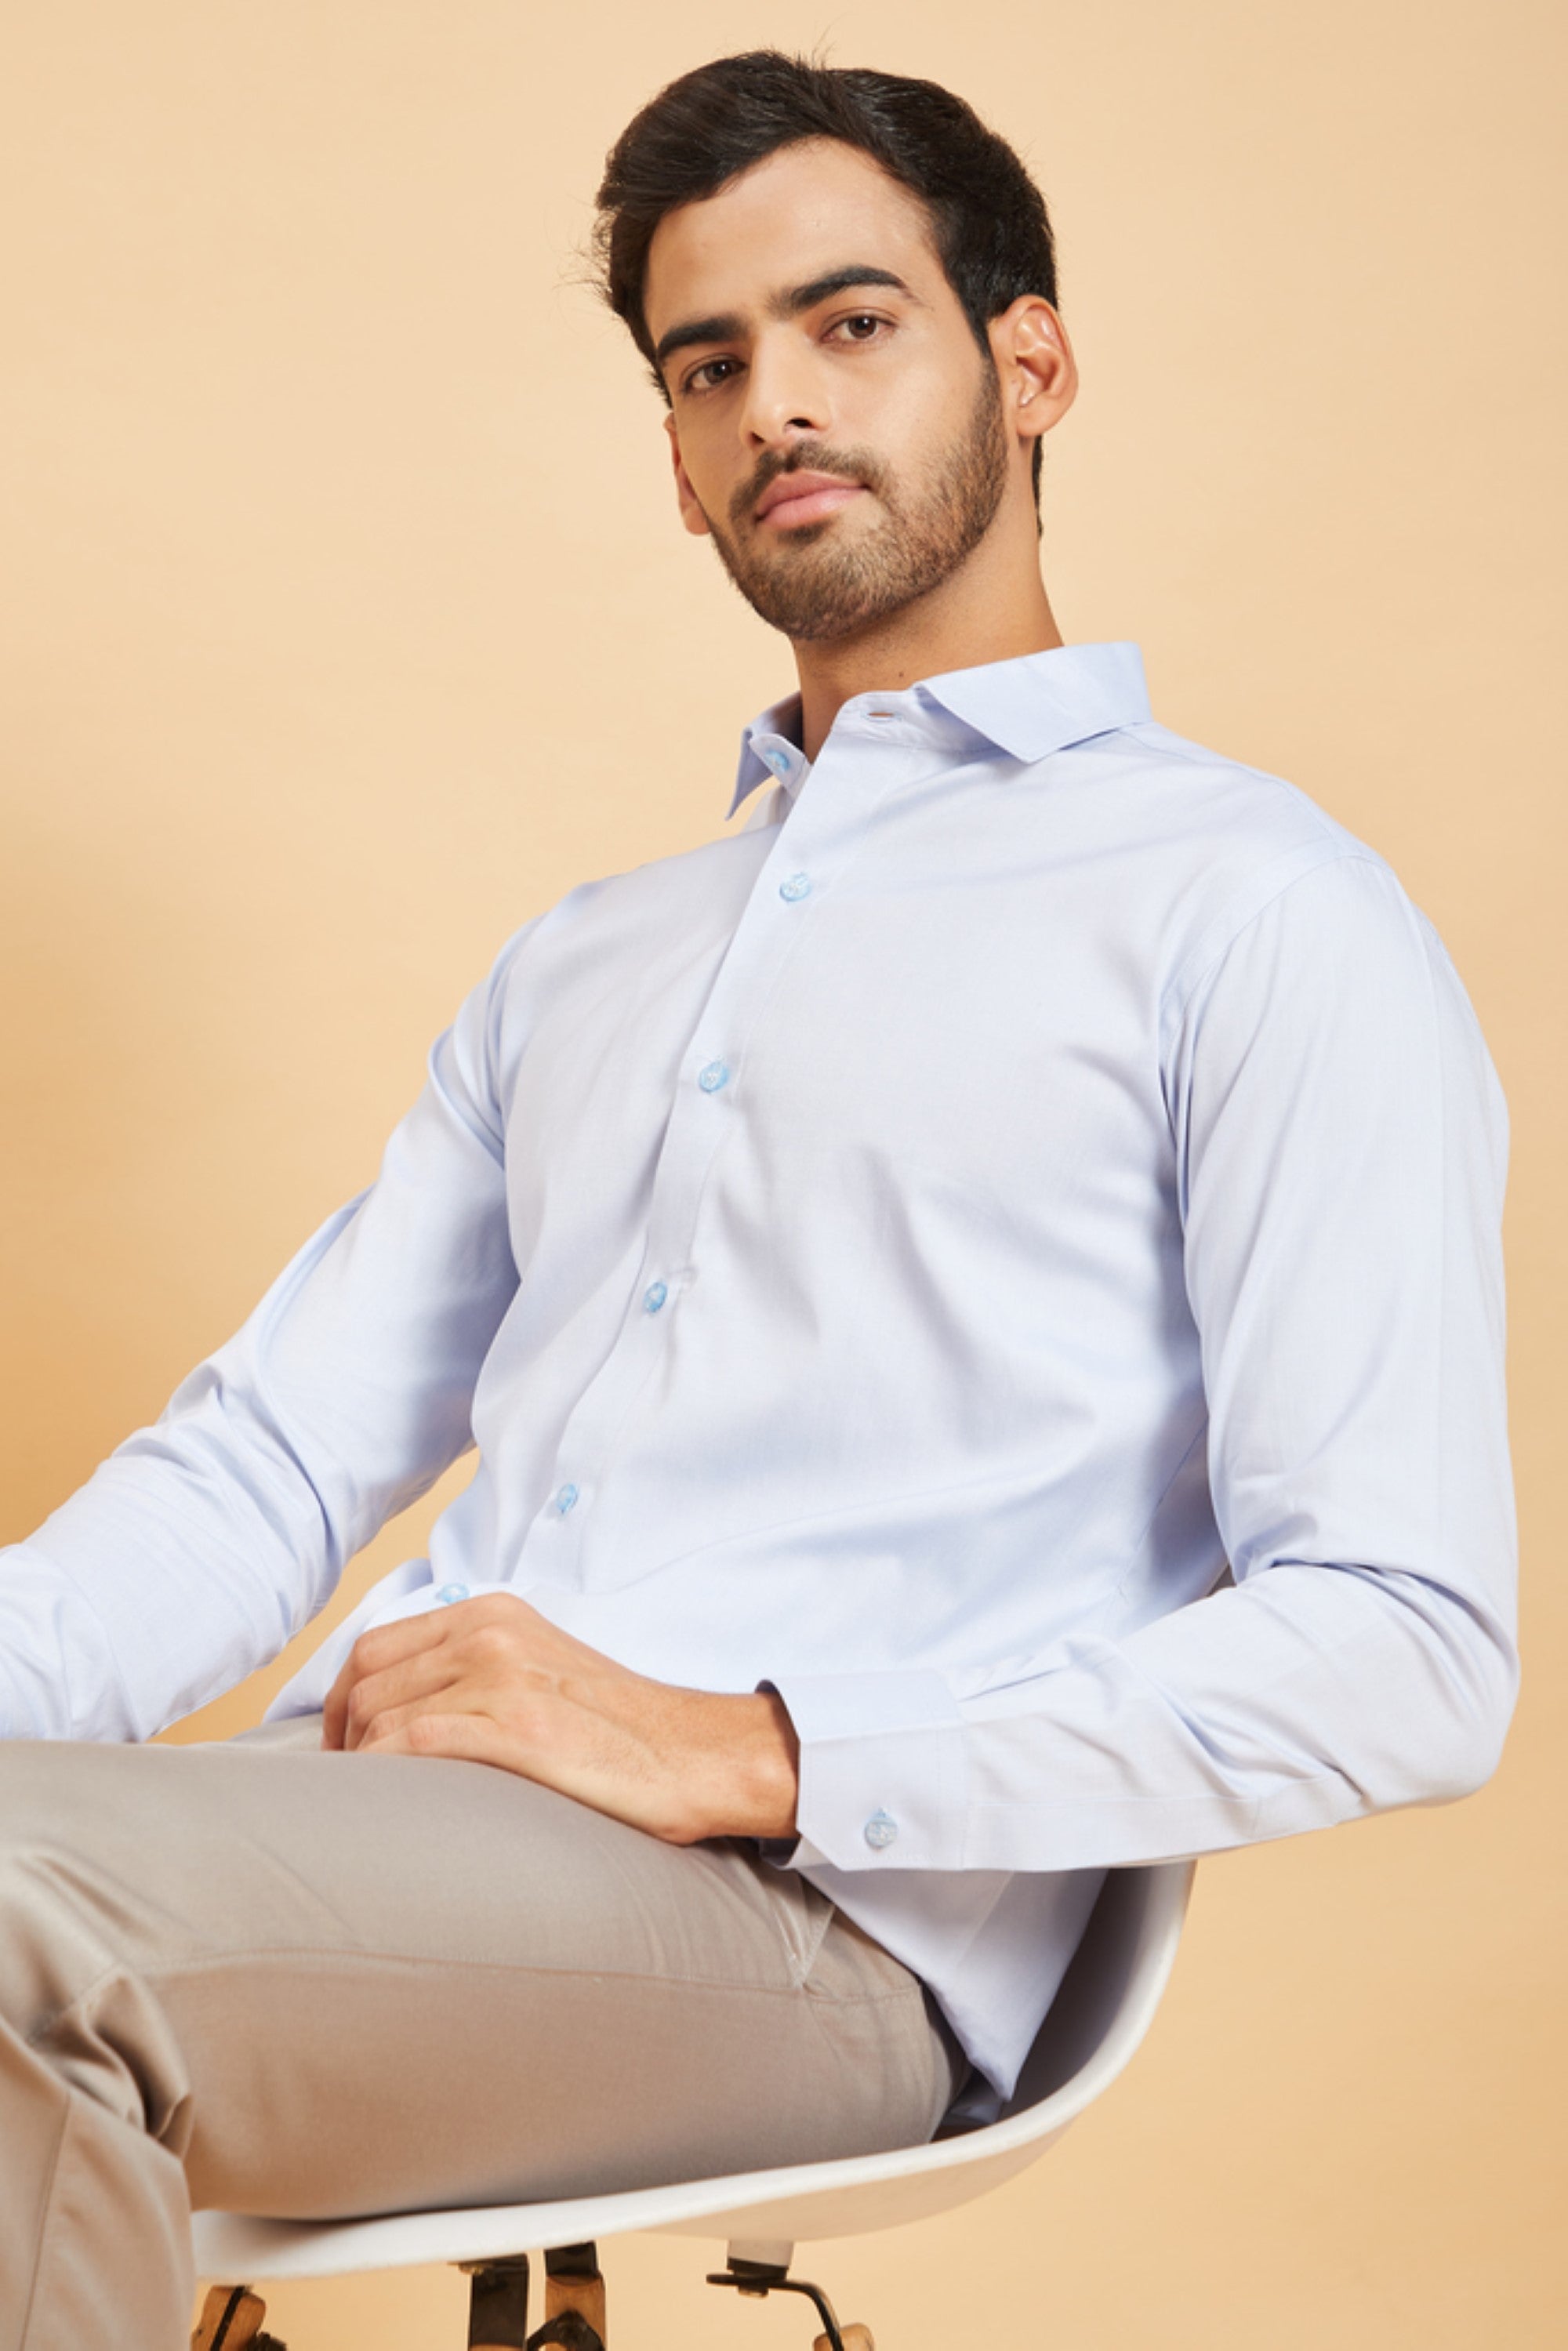 Men's Sky Blue Color Skii Collar Shirt Full Sleeves Casual Shirt - Hilo Design